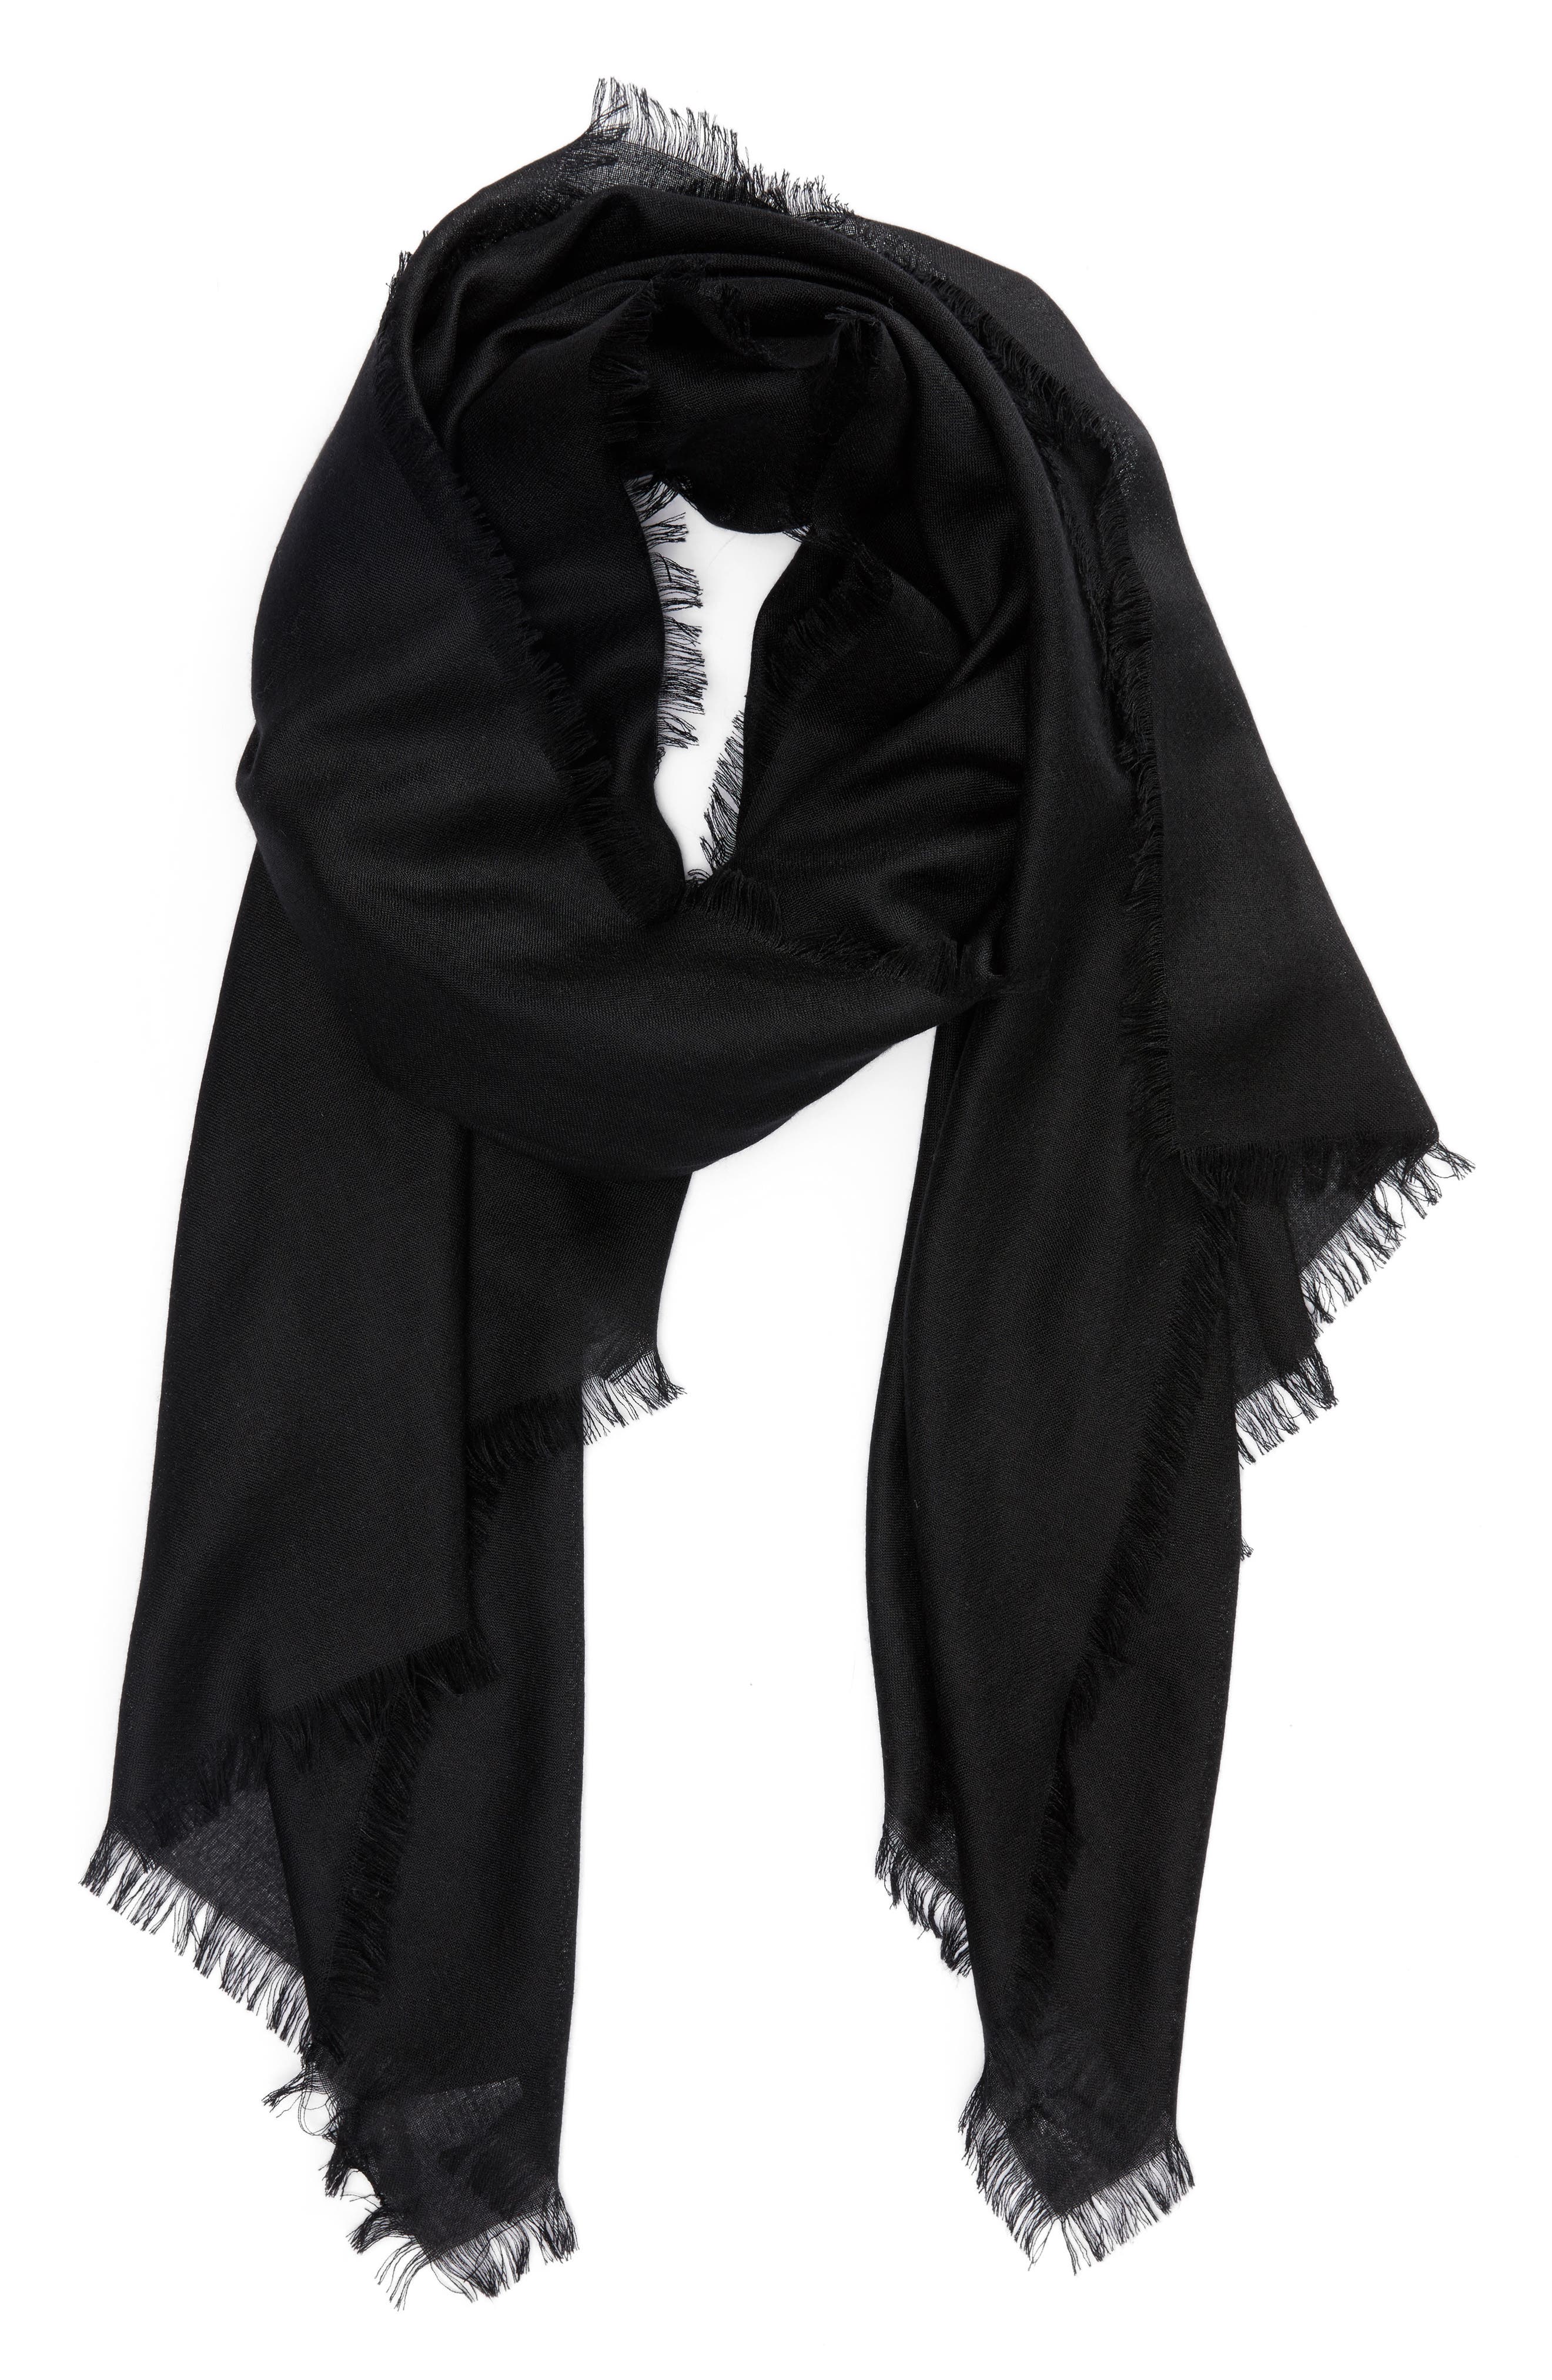 NORDSTROM COLLECTION Cashmere Wrap Black Retail $229.00 